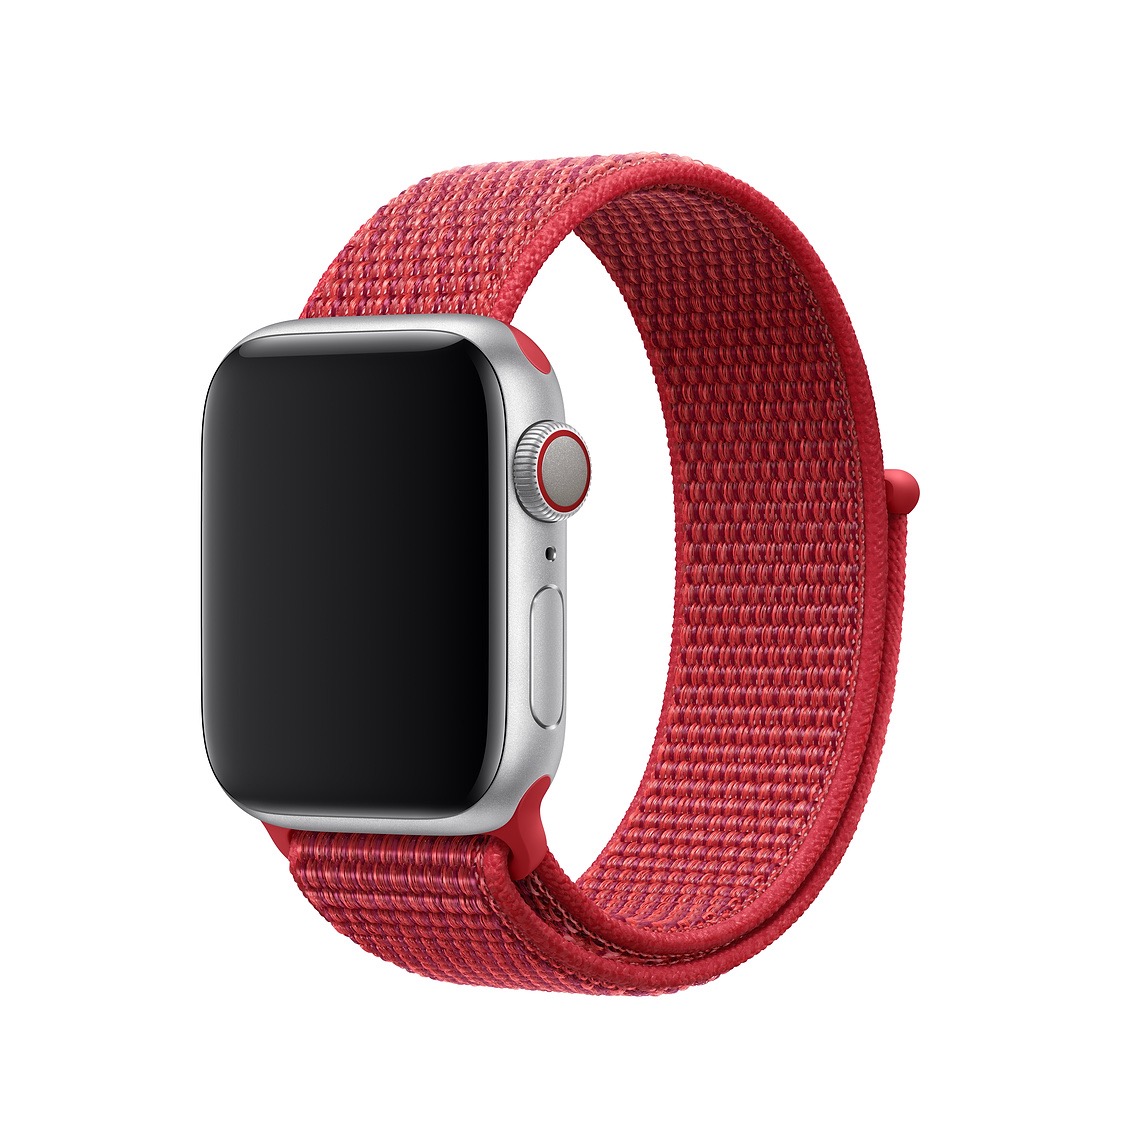 Apple、｢Apple Watch｣用バンドのスポーツループに(PRODUCT)REDモデルを追加